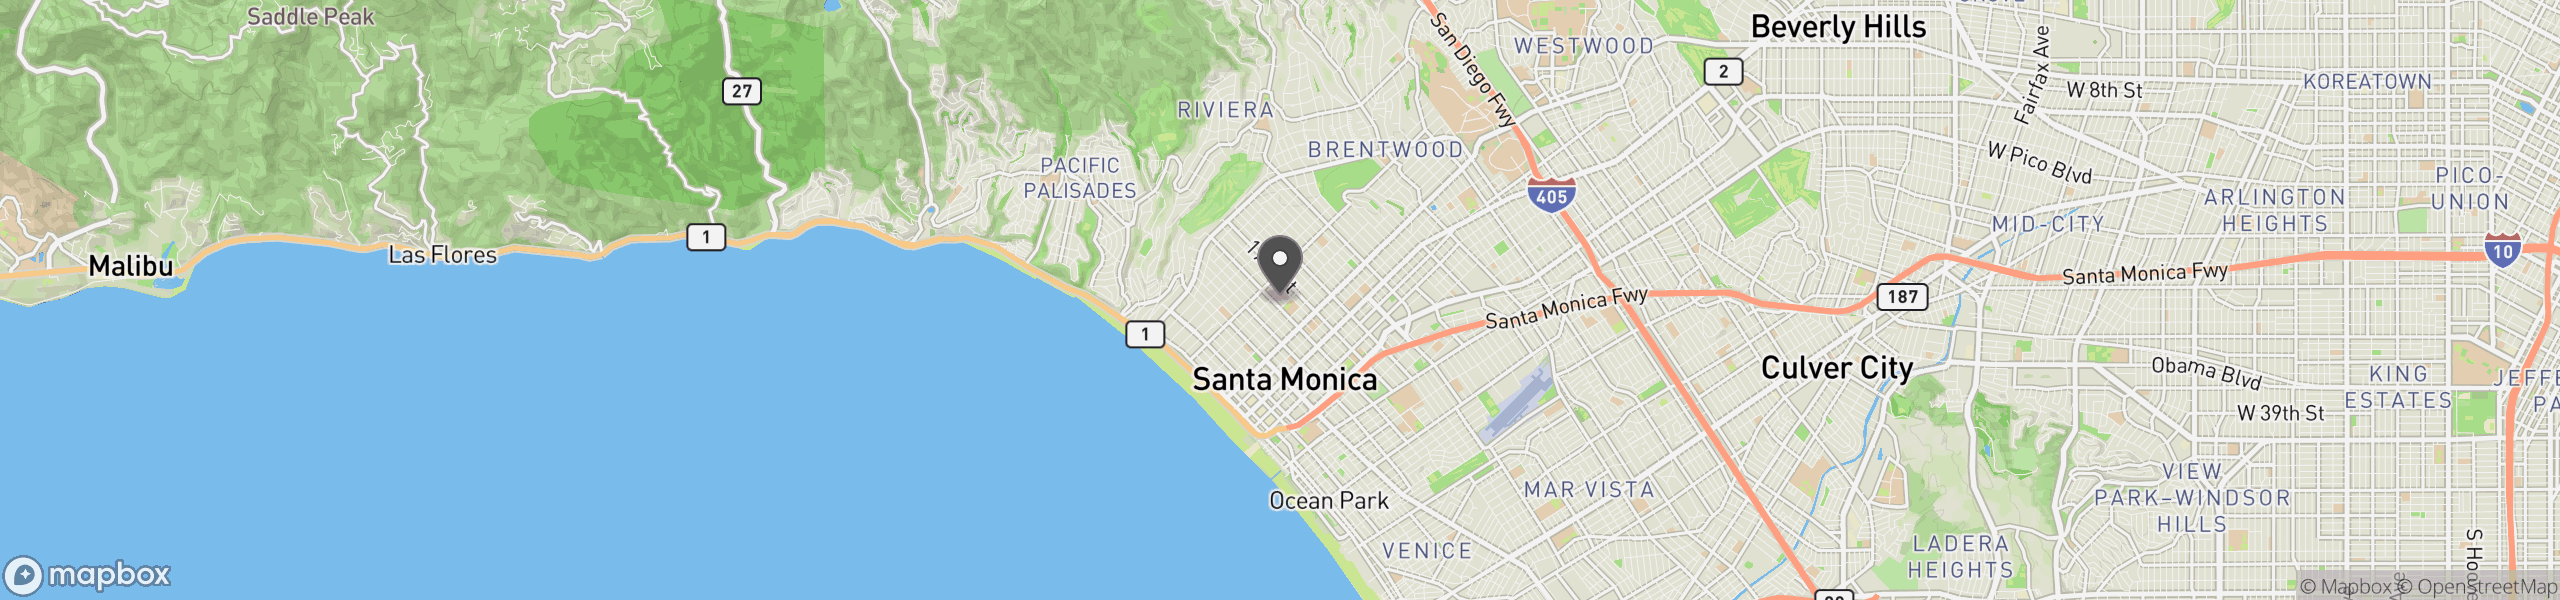 Santa Monica, CA 90403